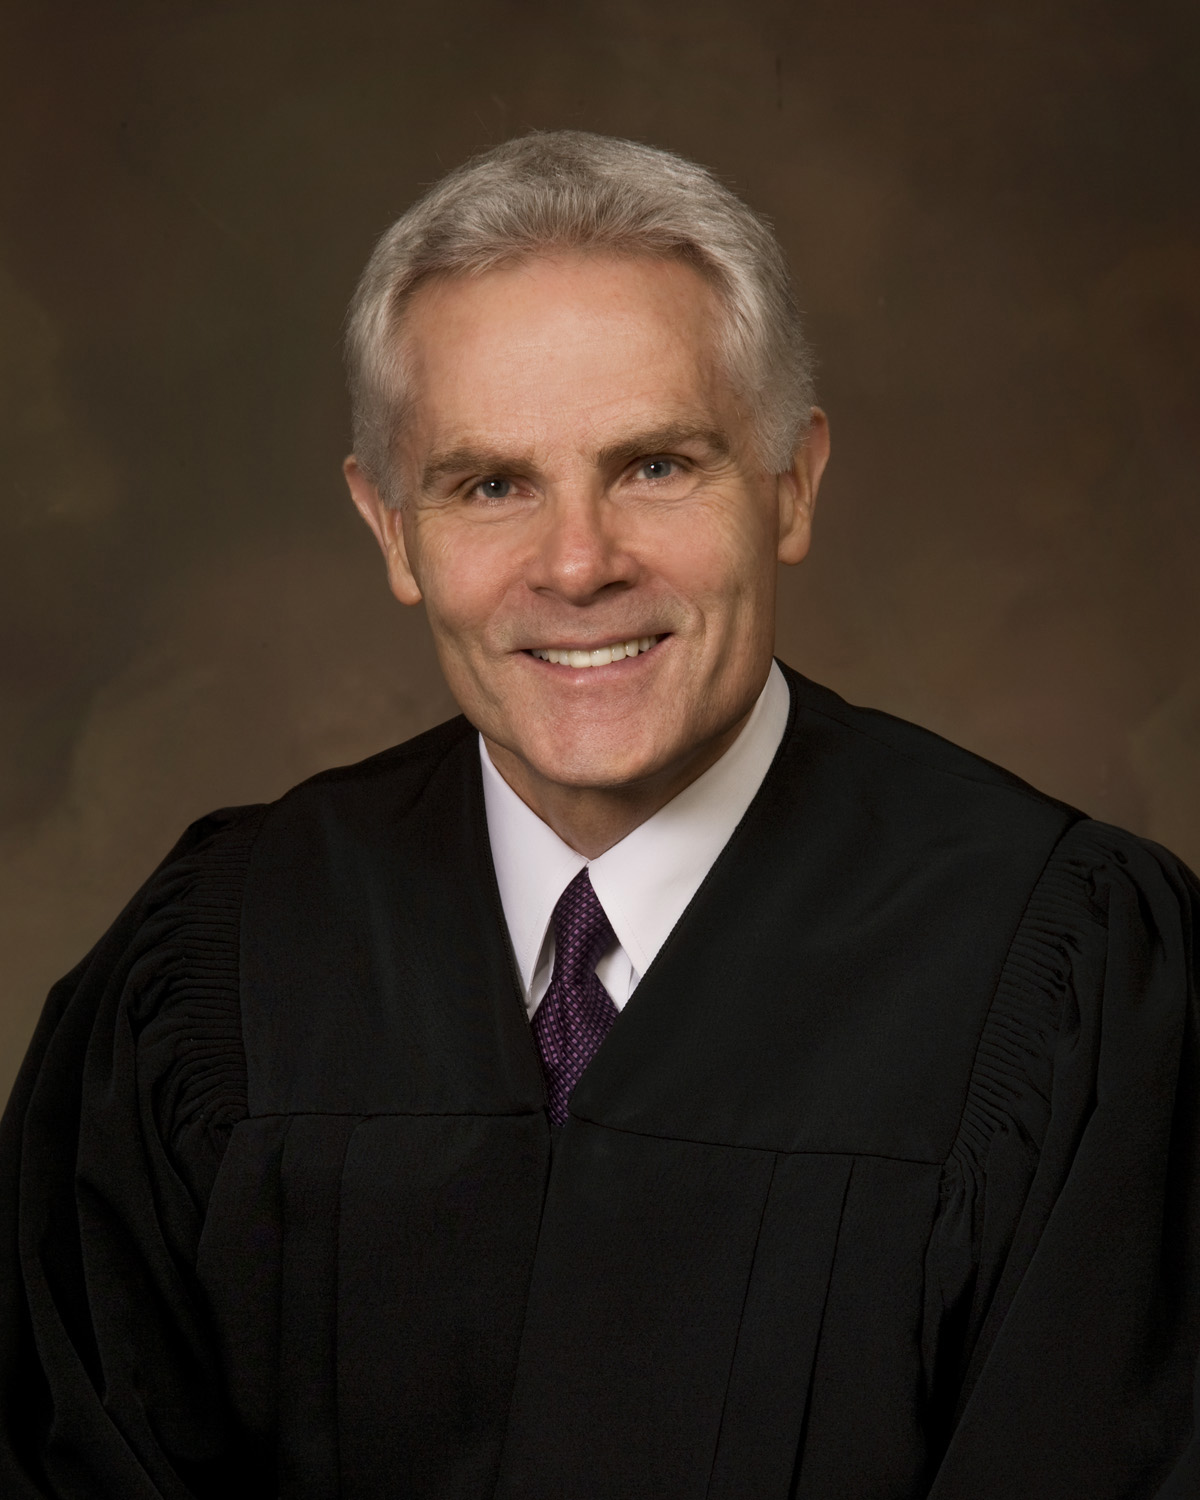 JUDGE MICHAEL D. LYON